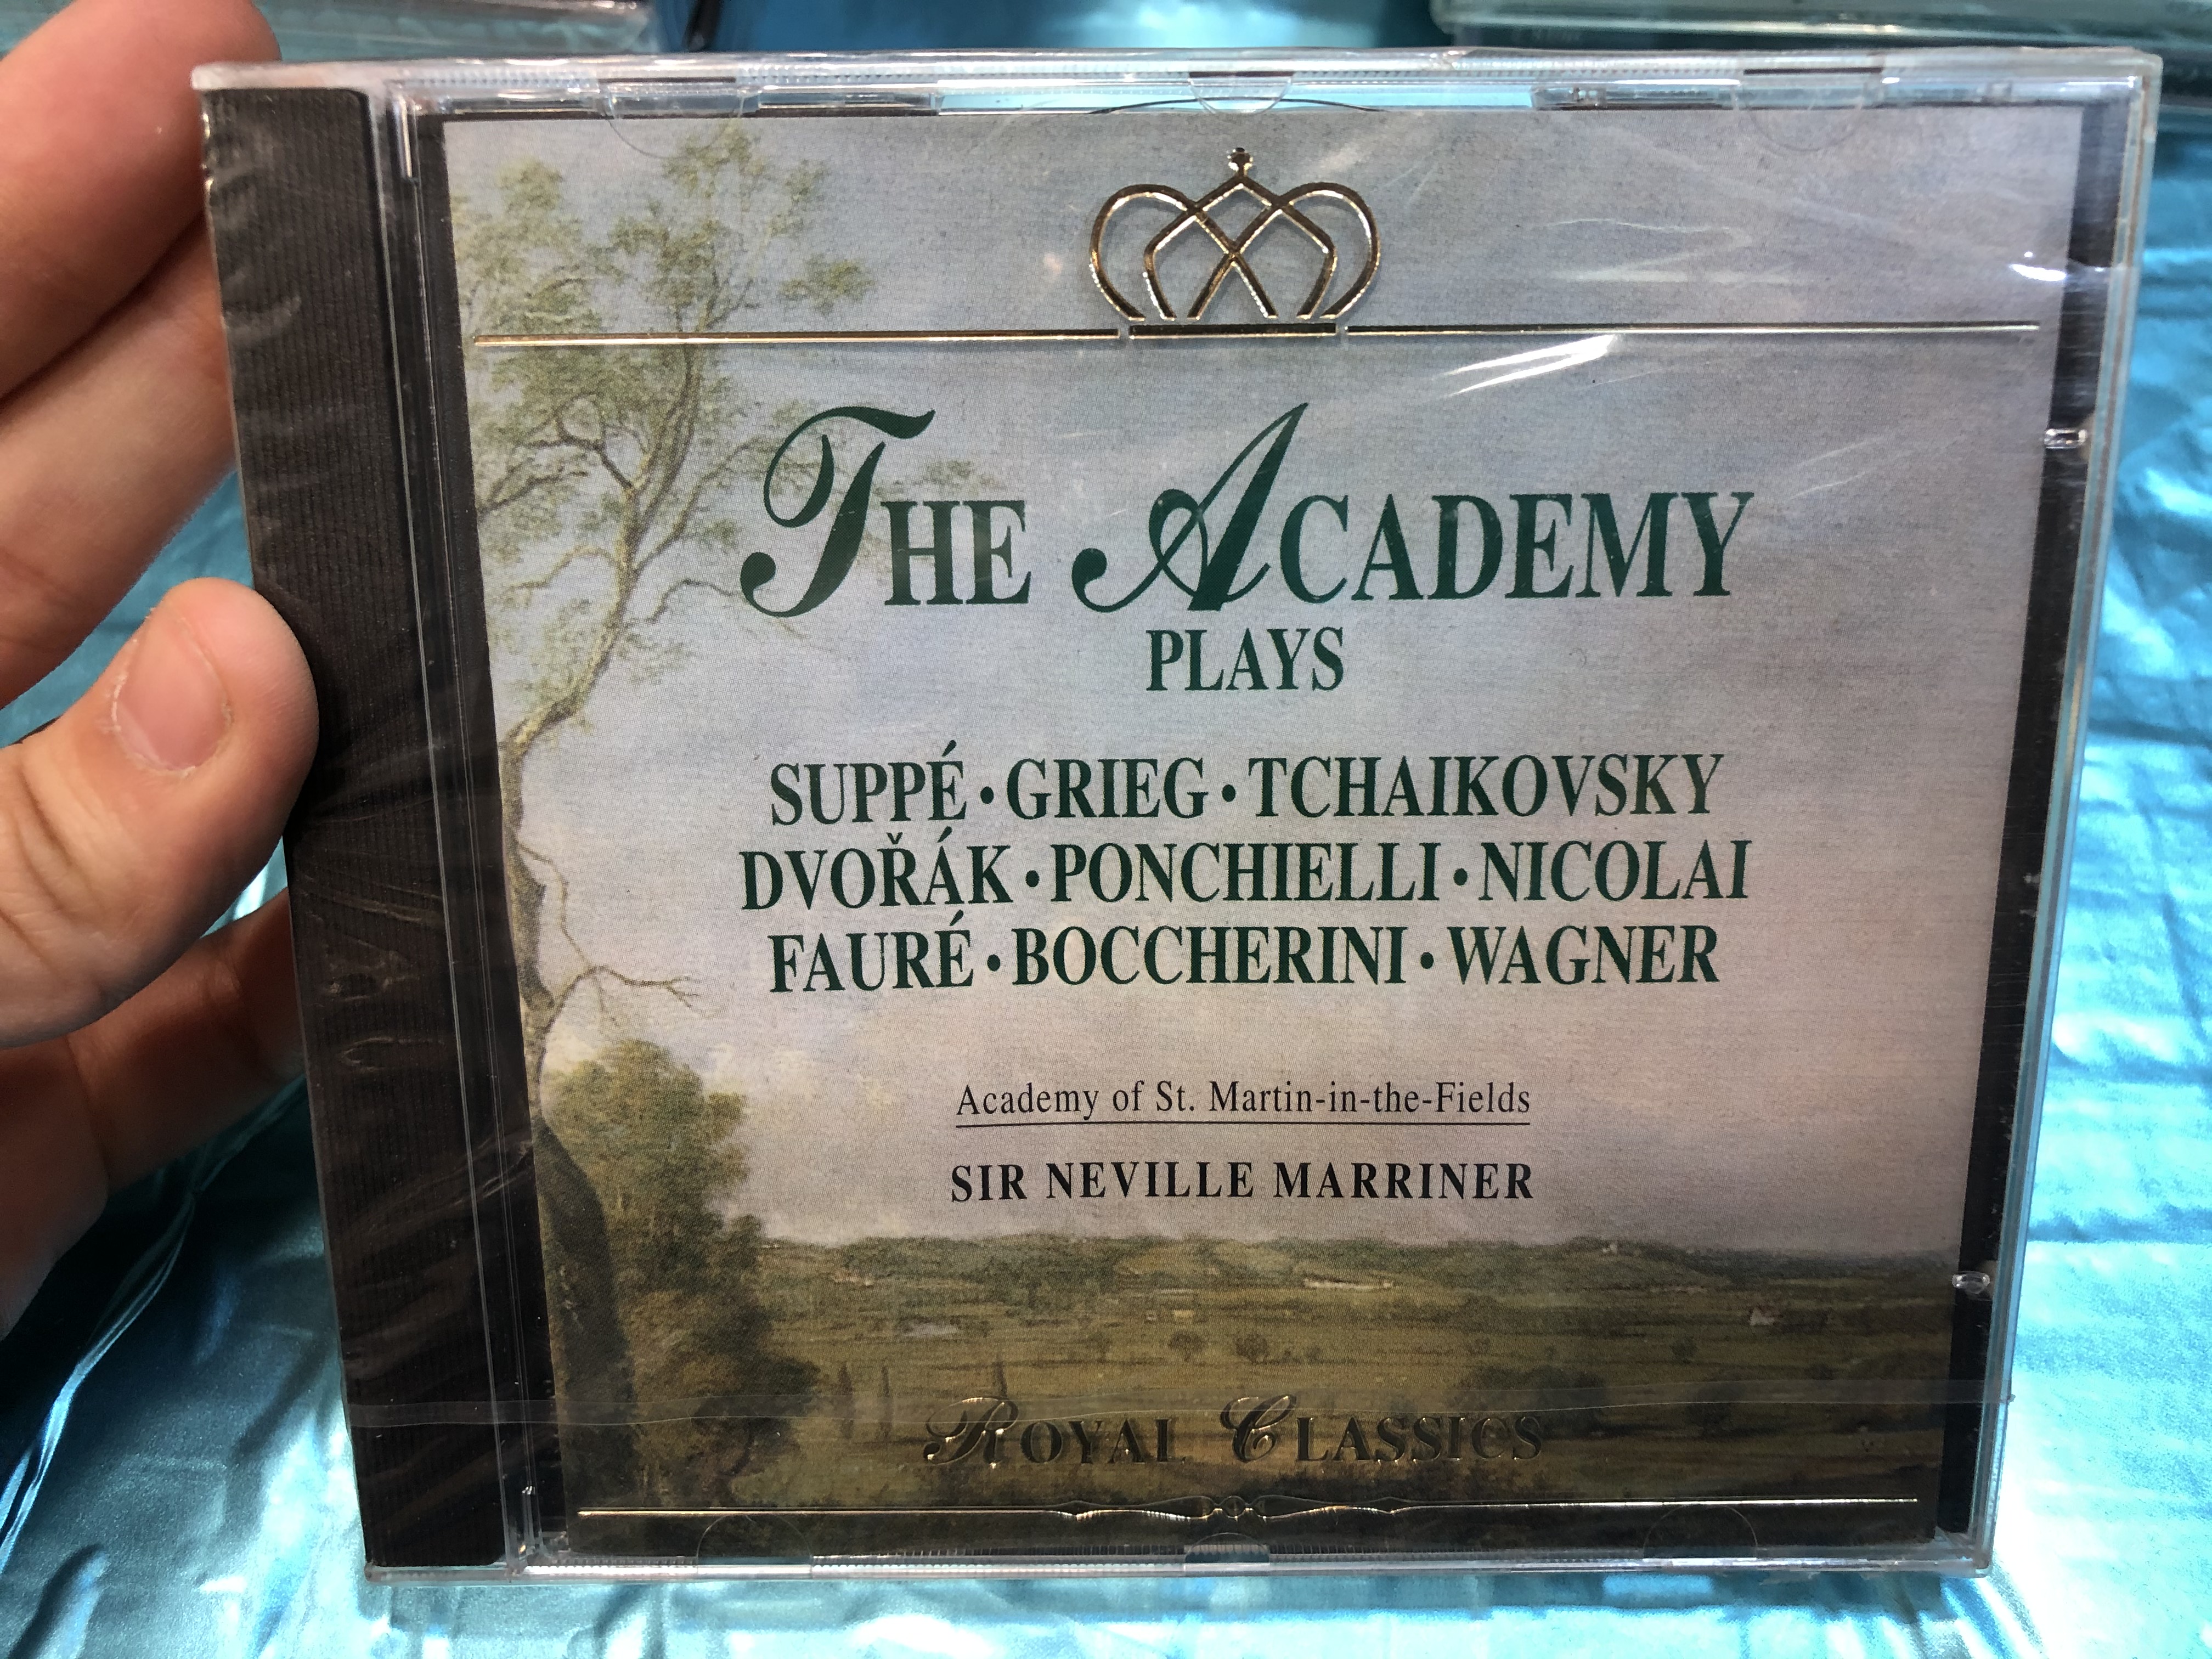 the-academy-plays-suppe-grieg-tchaikovsy-dvorak-ponchielli-nicolai-faure-boccherini-wagner-academy-od-st.-martin-in-the-fields-sir-neville-marriner-royal-classics-audio-cd-1995-roy-1-.jpg